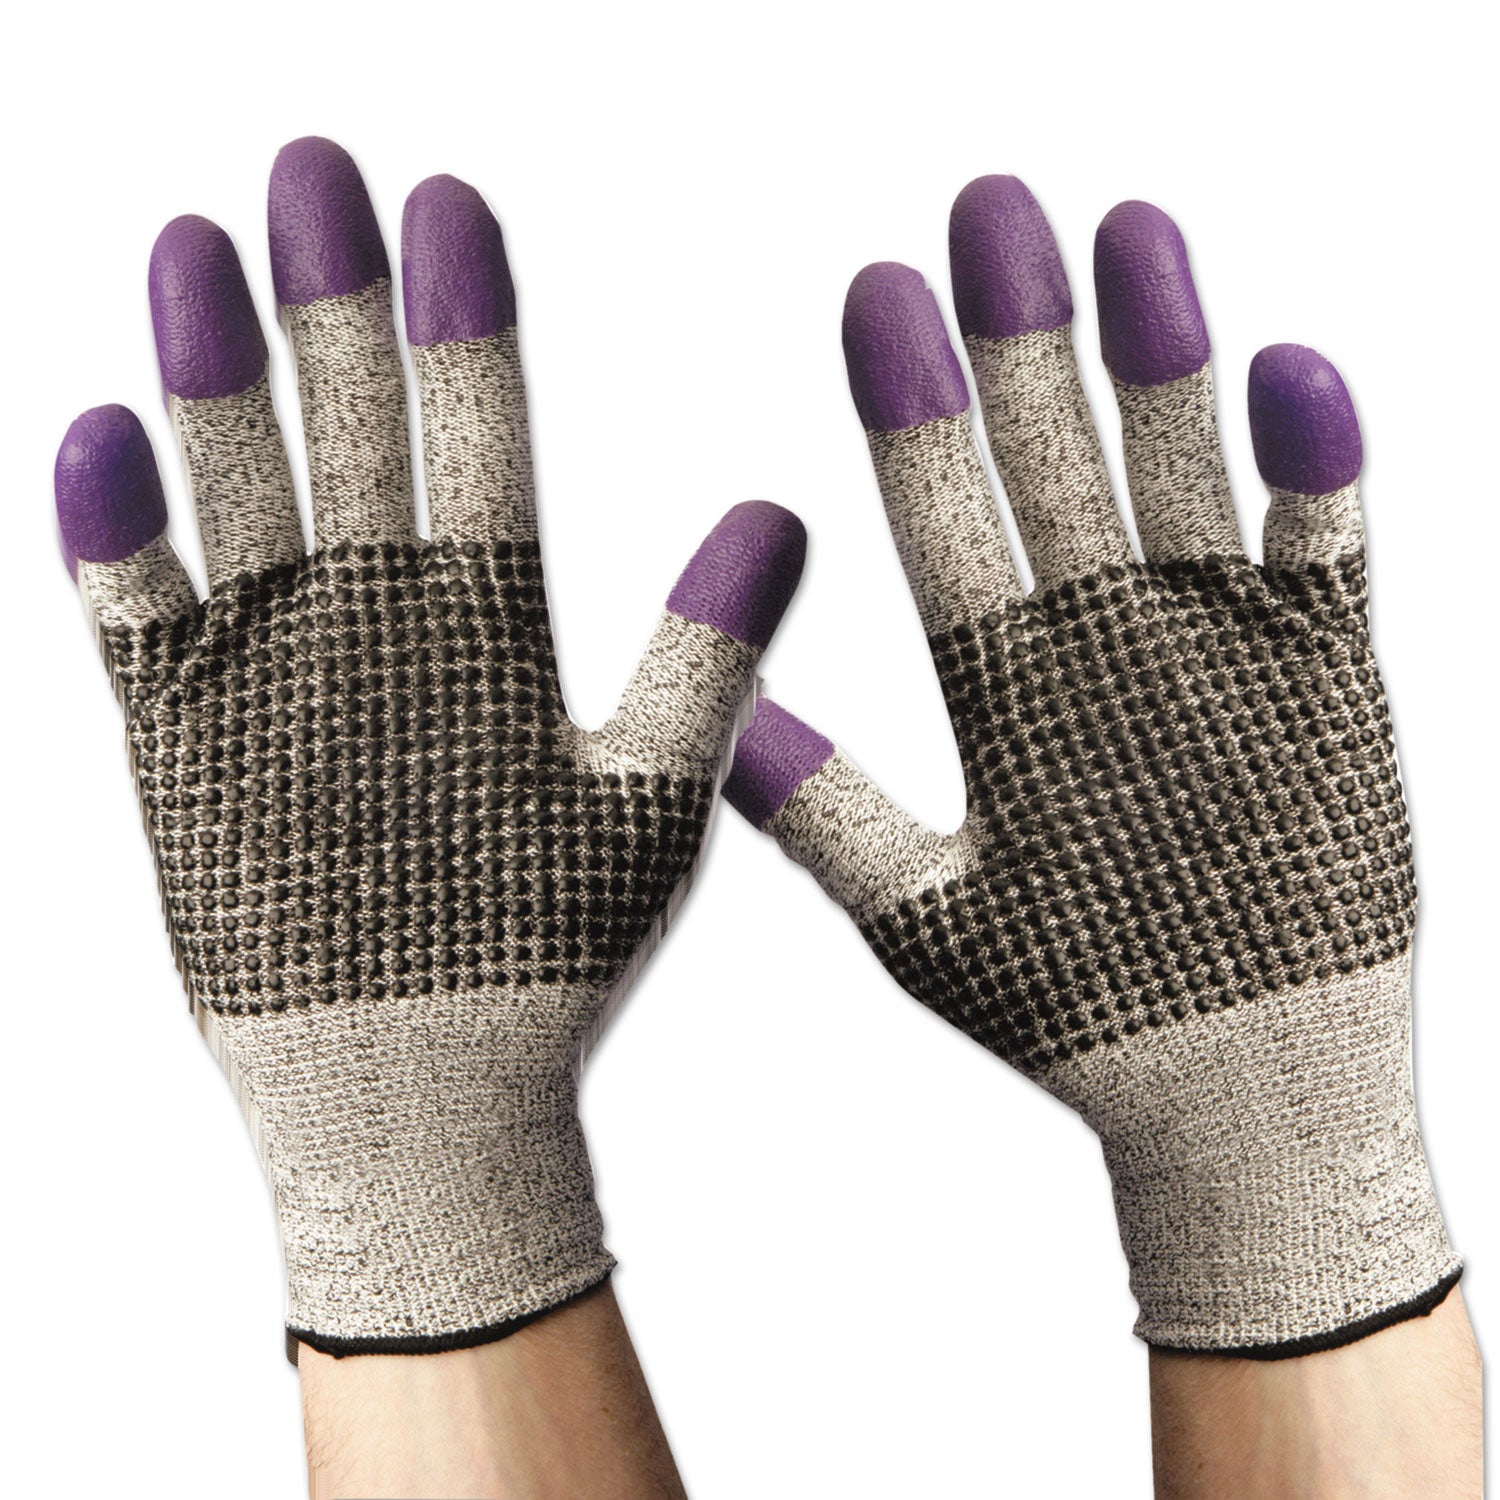 g60-purple-nitrile-gloves-230-mm-length-medium-size-8-black-white-pair_kcc97431 - 5